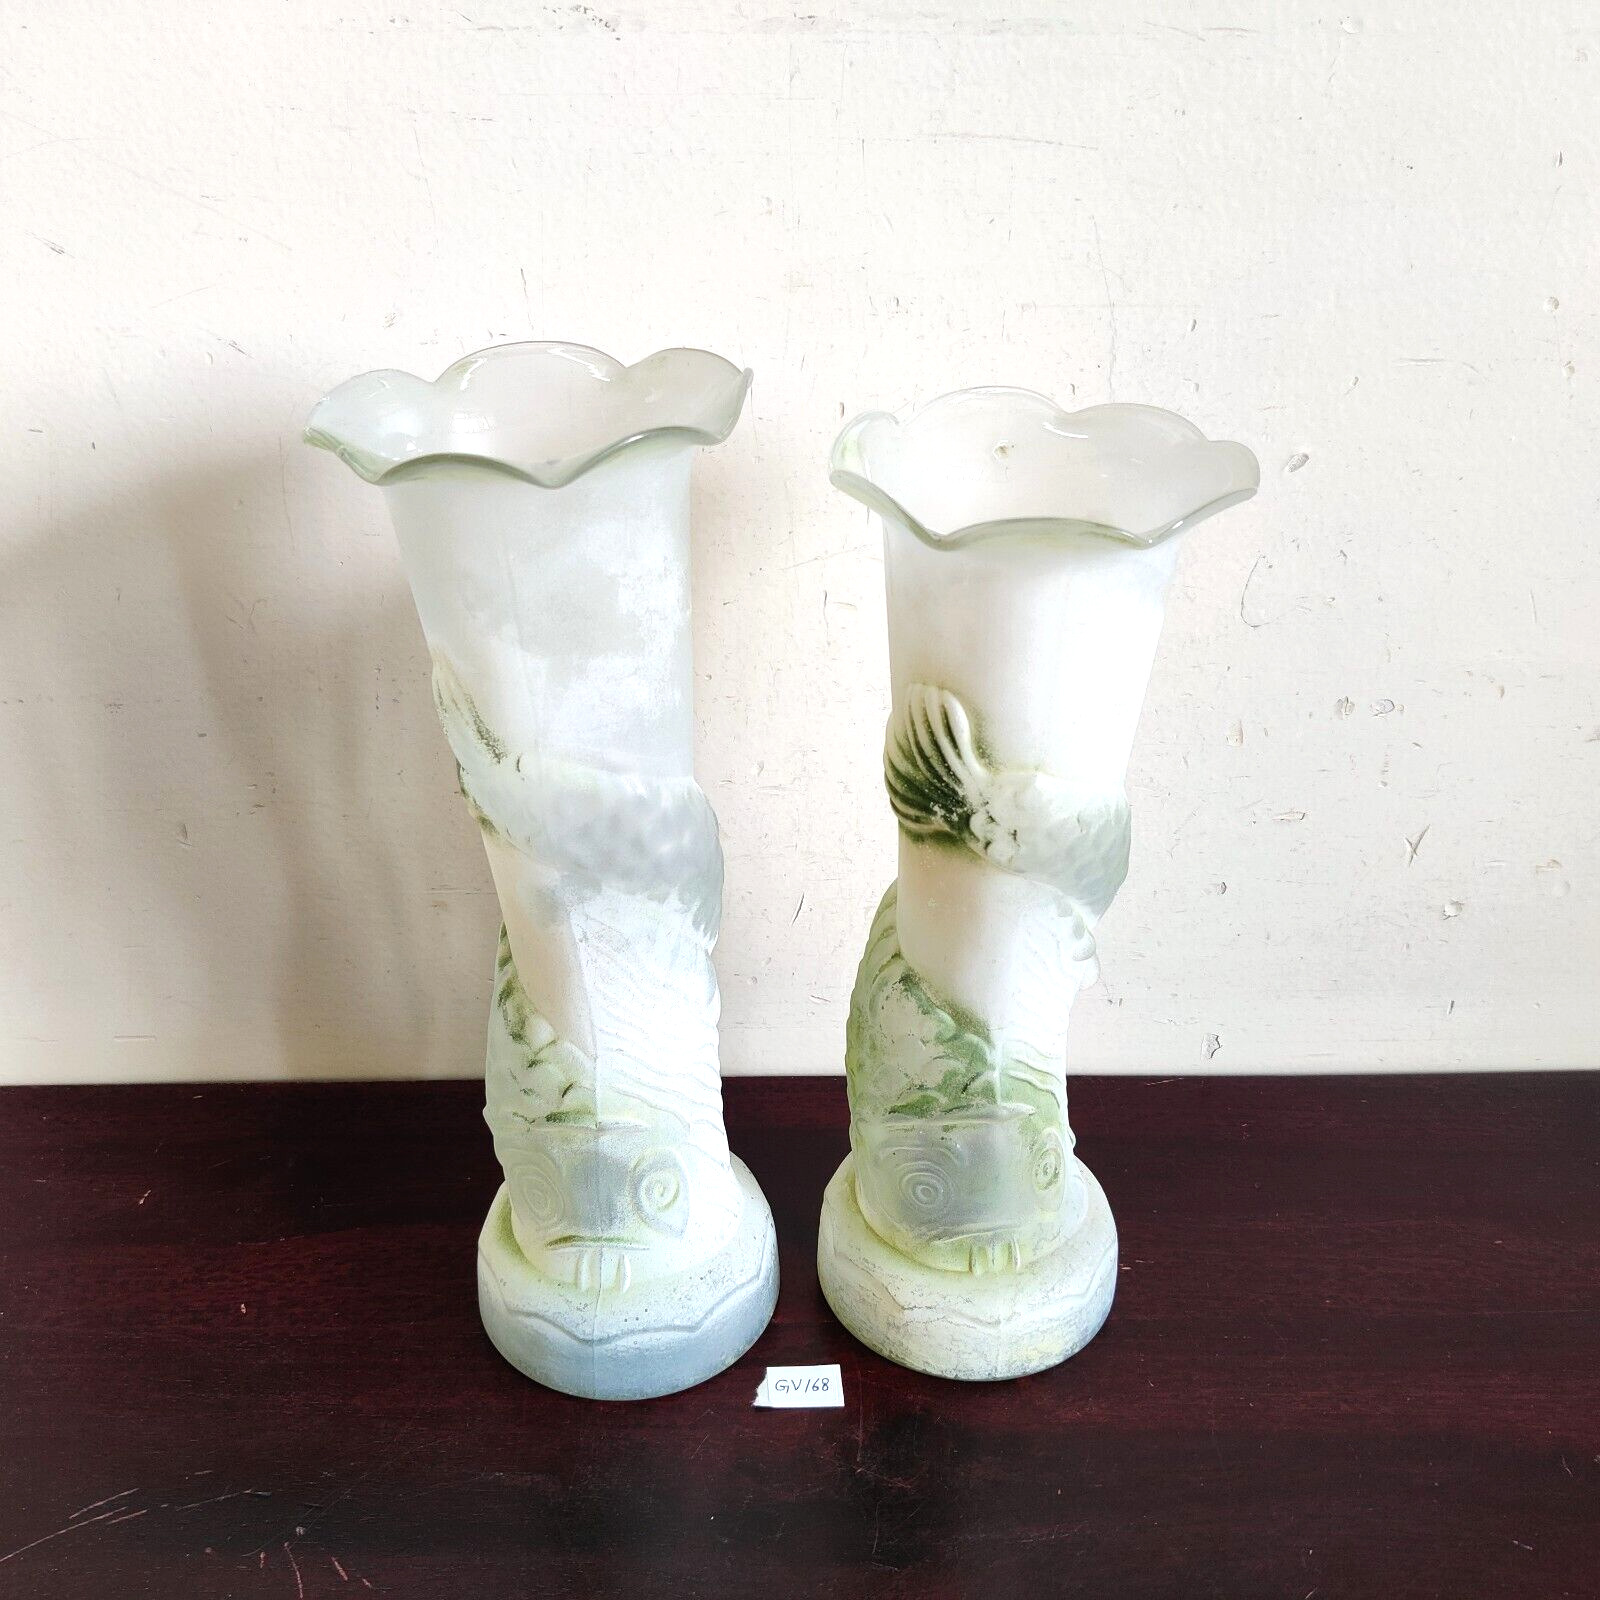 1930s Vintage Unique Fish Design White Green Flower Vase Pair Decorative GV168